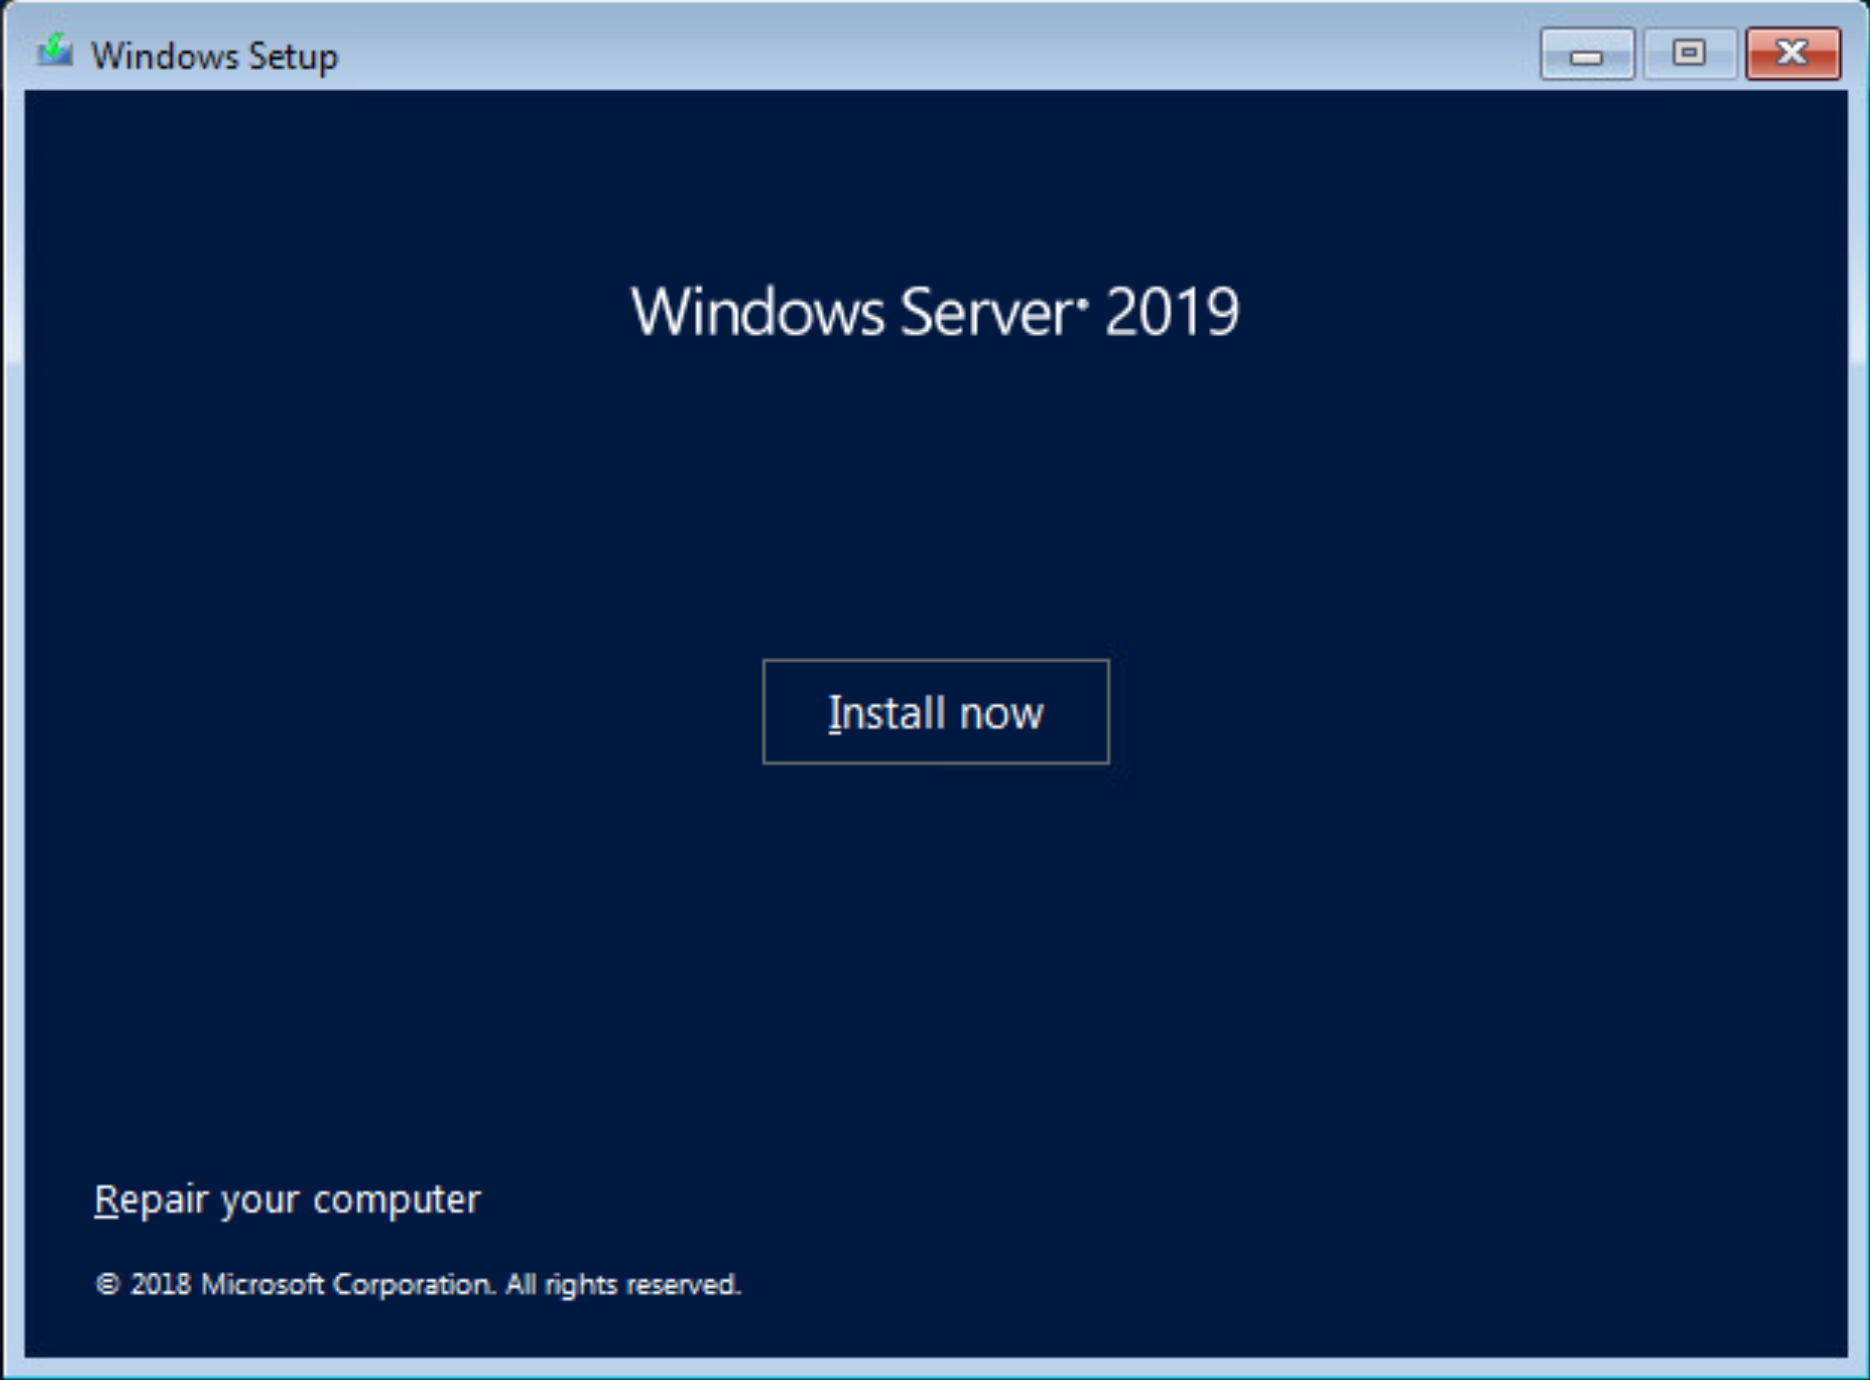 Screenshot of Windows Setup window showing the "Install now" button.